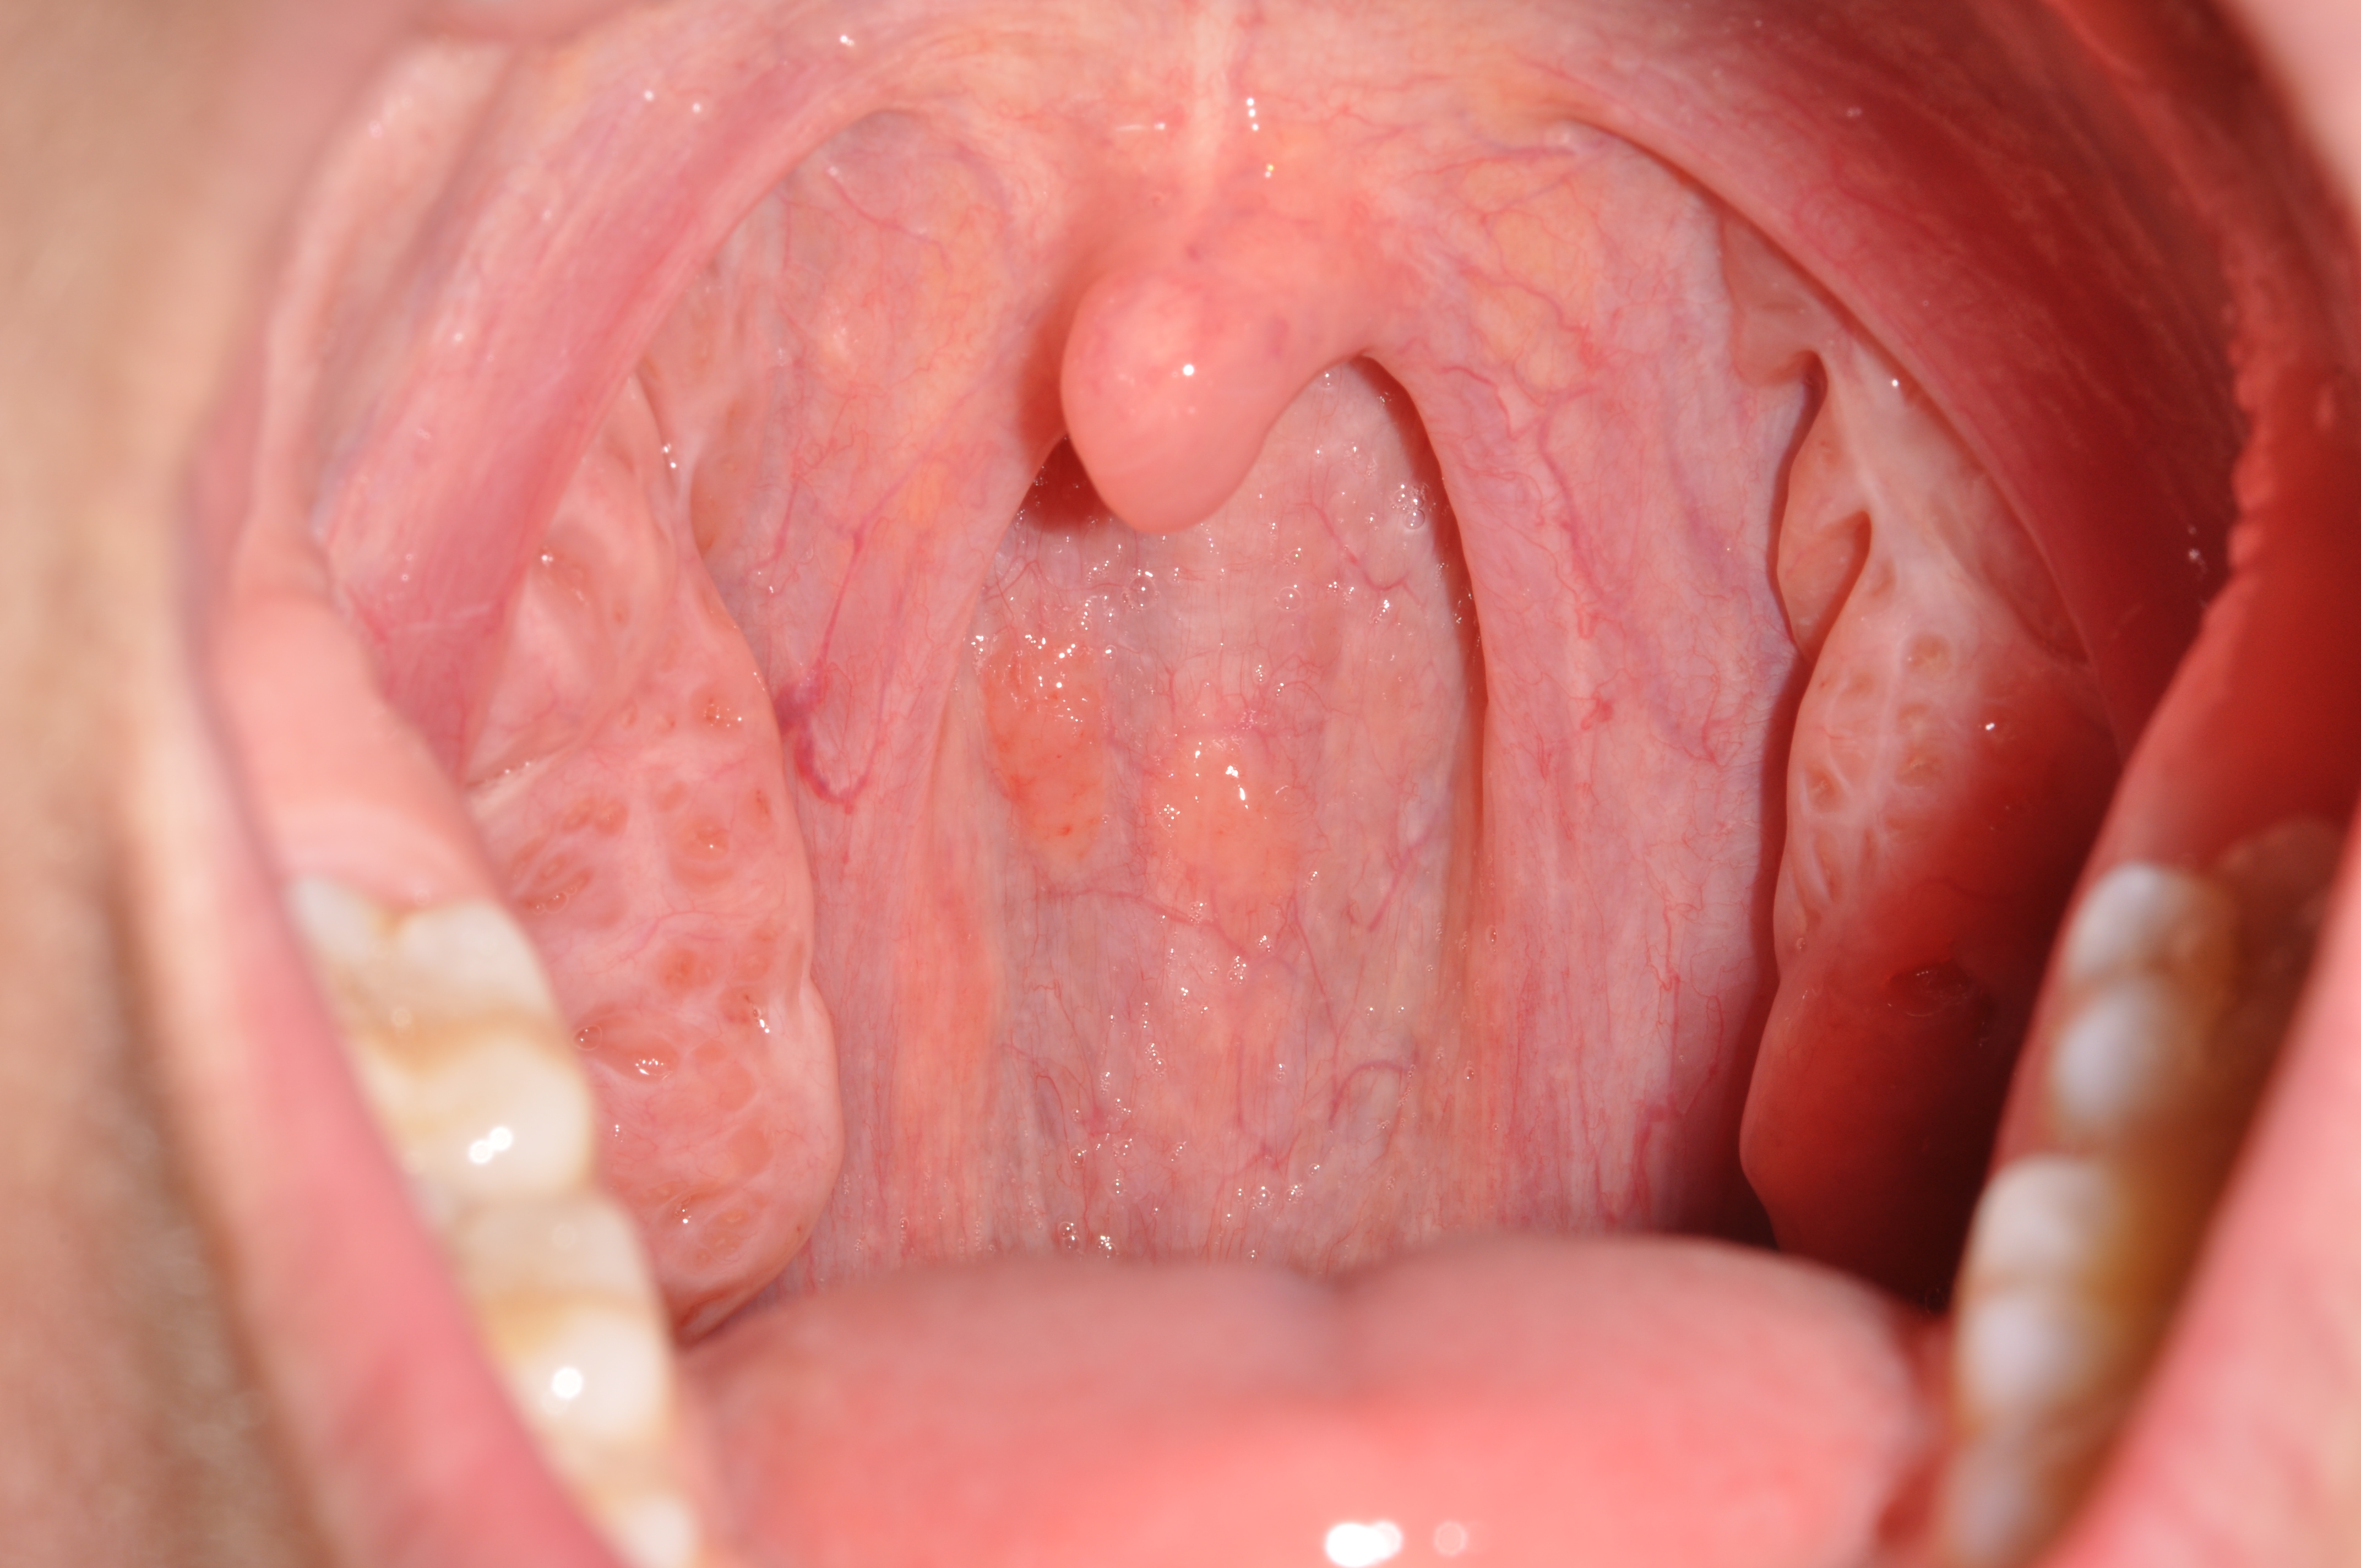 normal throat